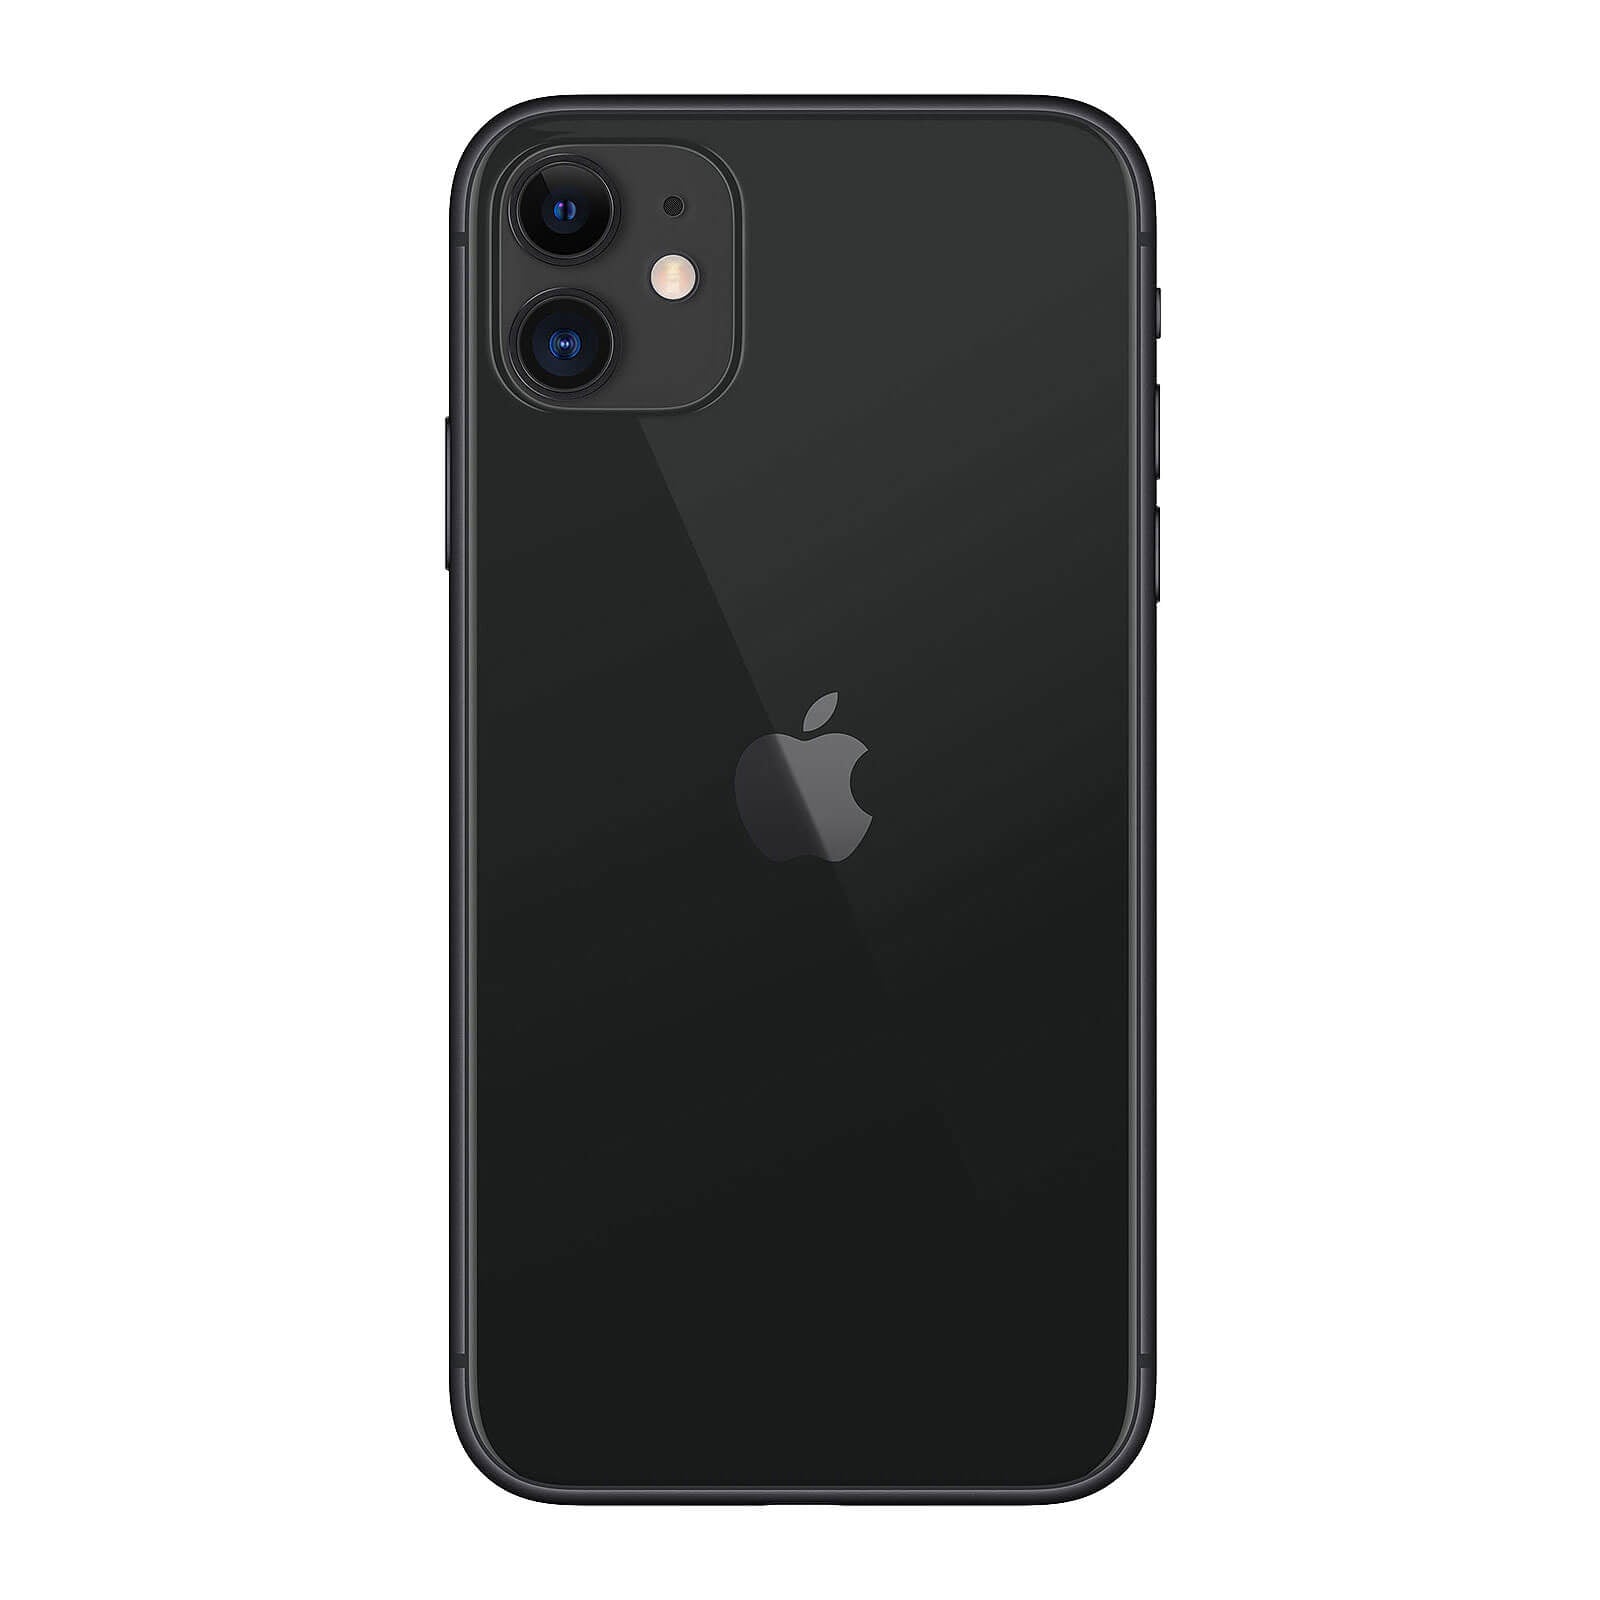 Apple iPhone 11 256GB Black Good - T-Mobile